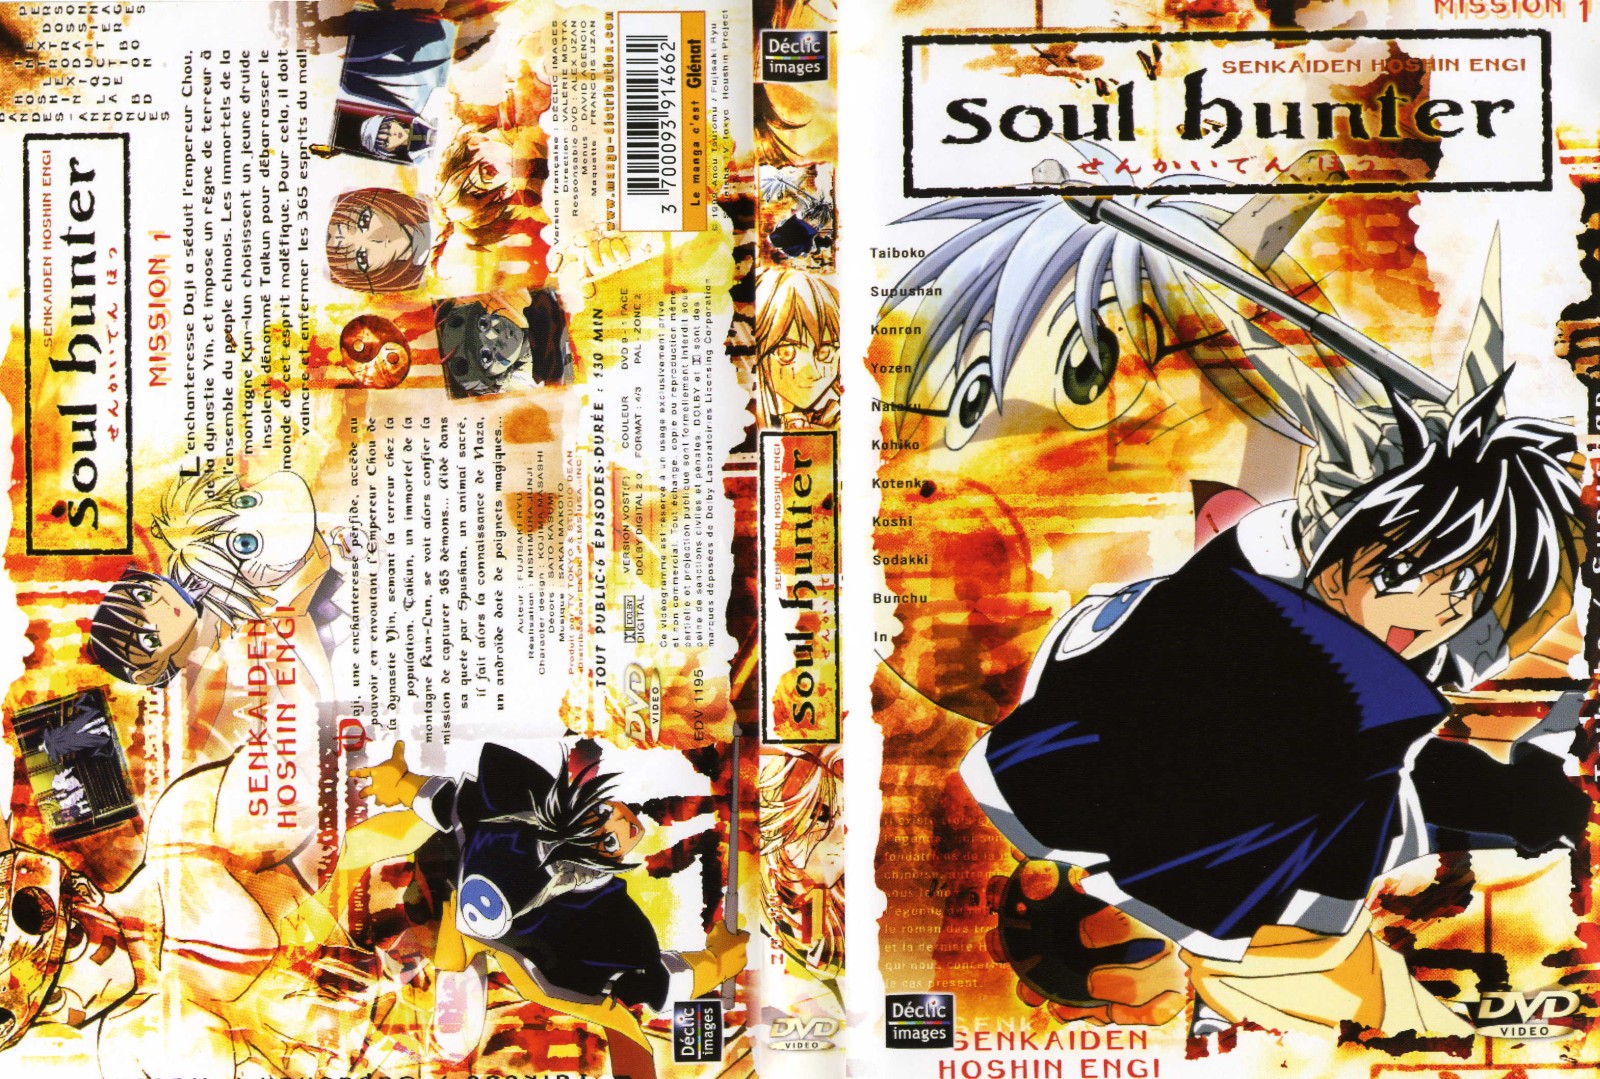 Jaquette DVD Soul hunter vol 1